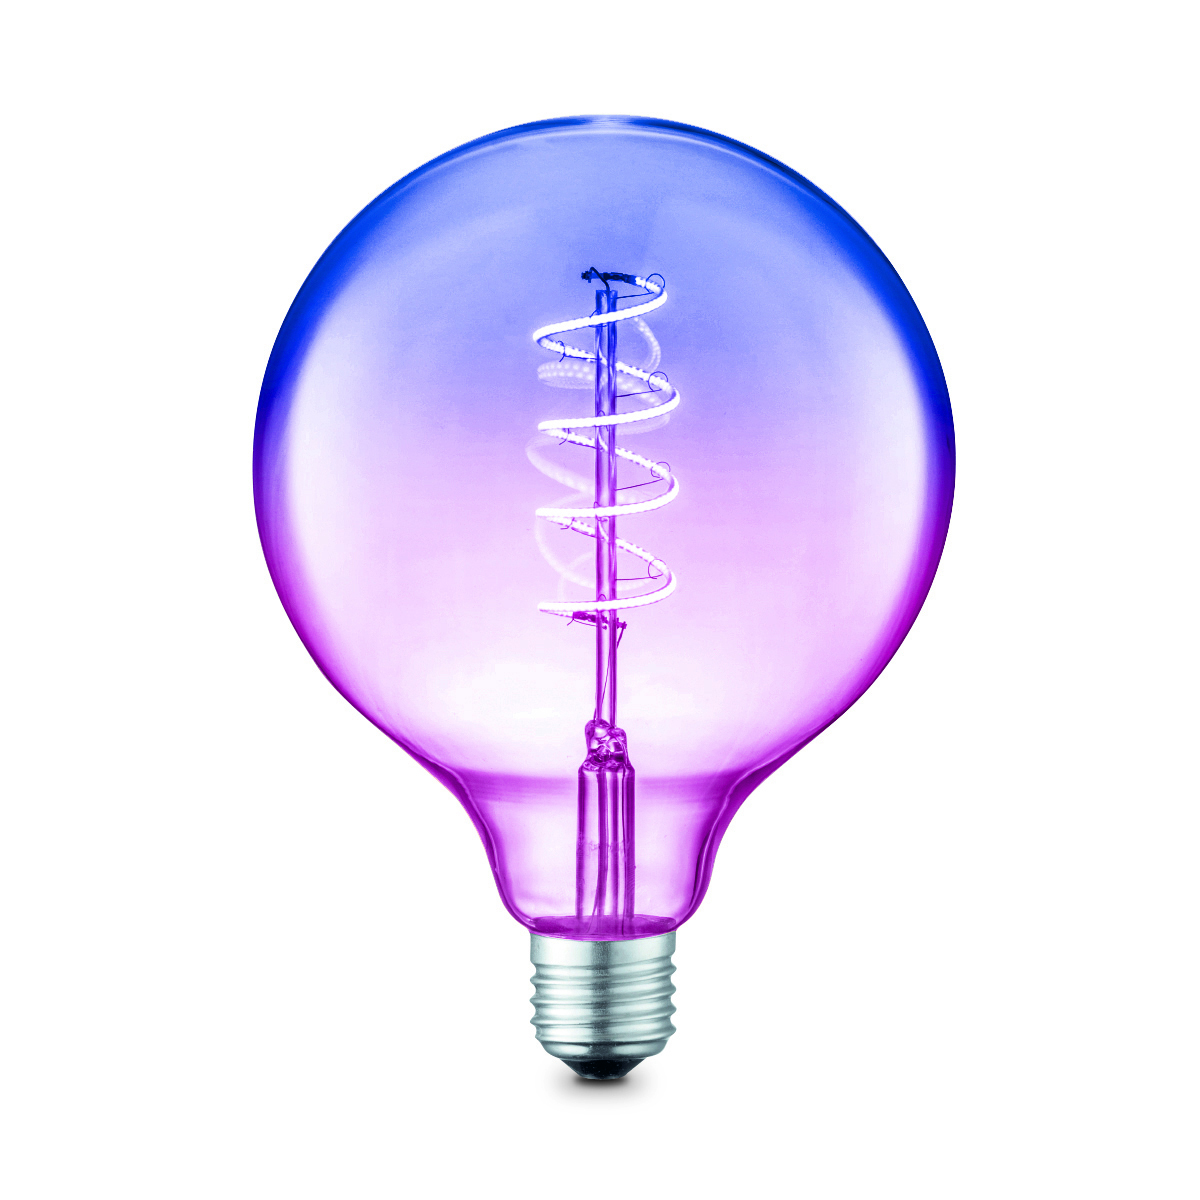 Tangla lighting - TLB-9006-04C - LED Light Bulb Single Spiral filament - G125 4W gradient color bulb - blue - non dimmable - E27